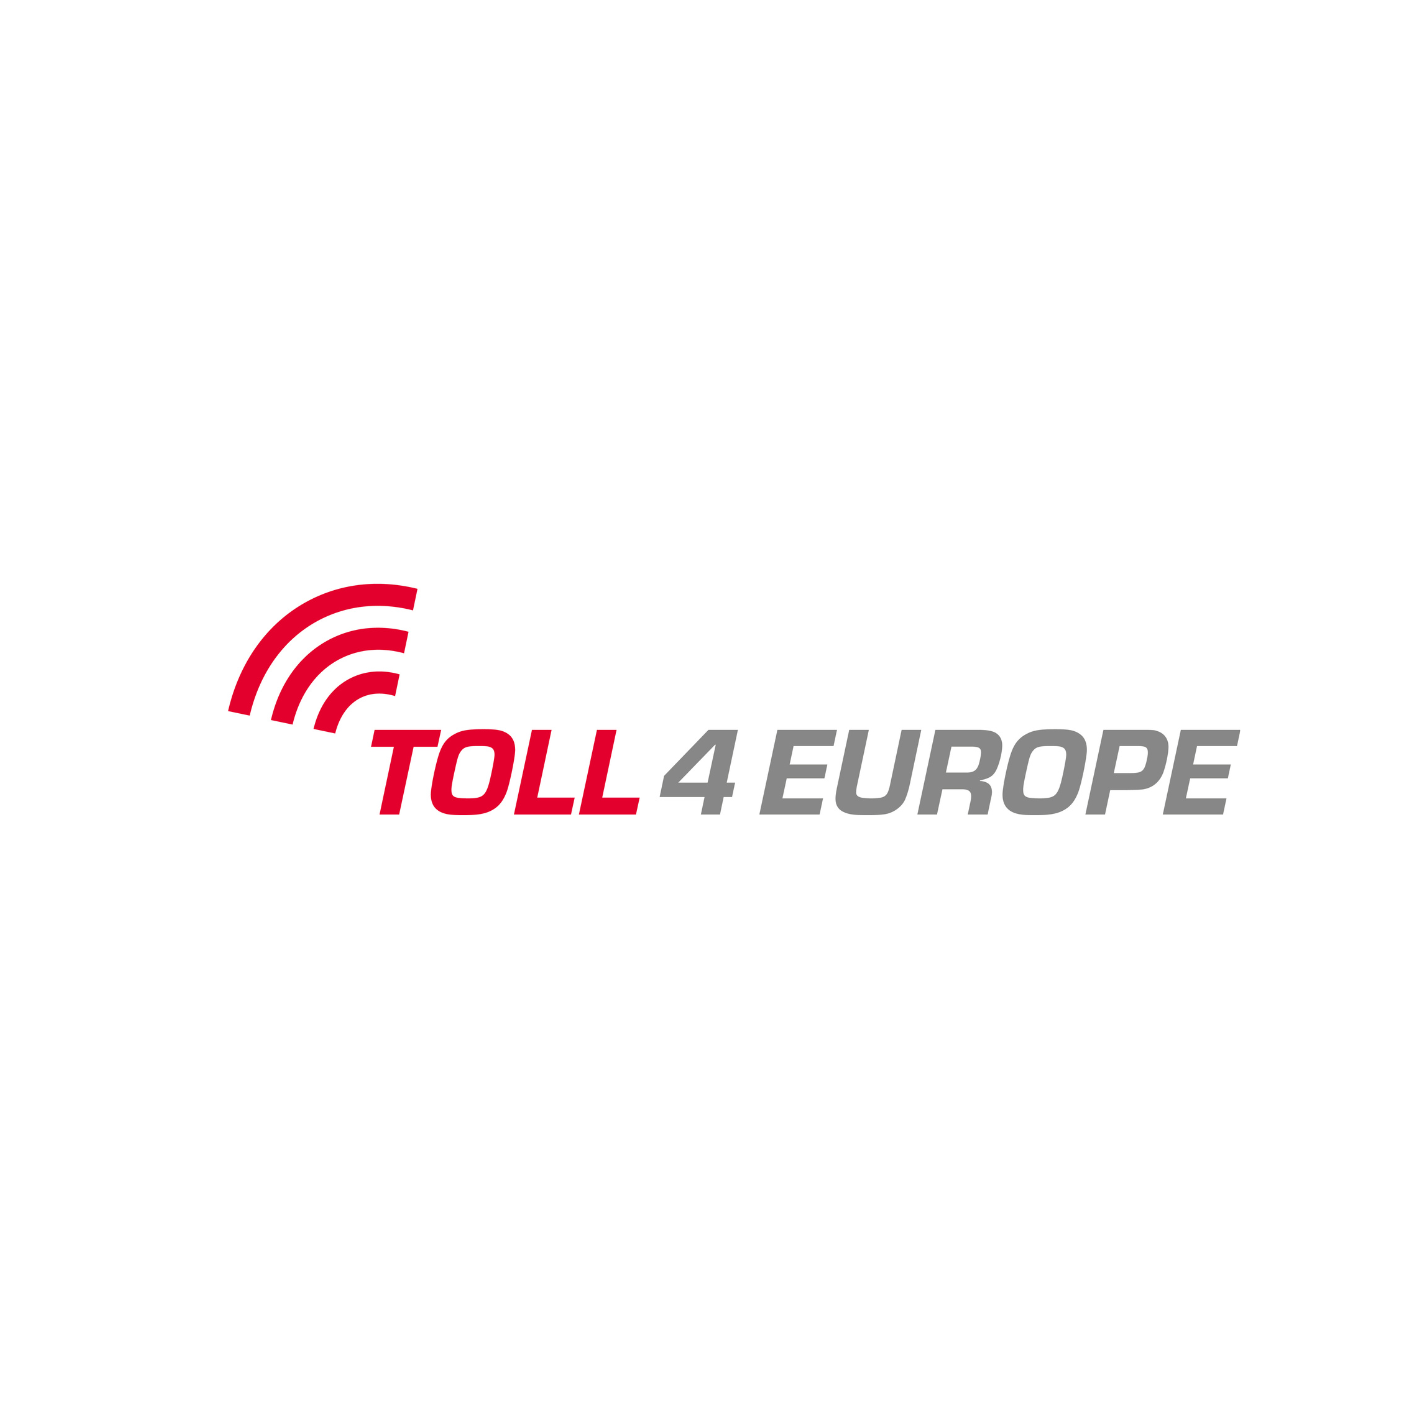 Tol-4-europa-logo